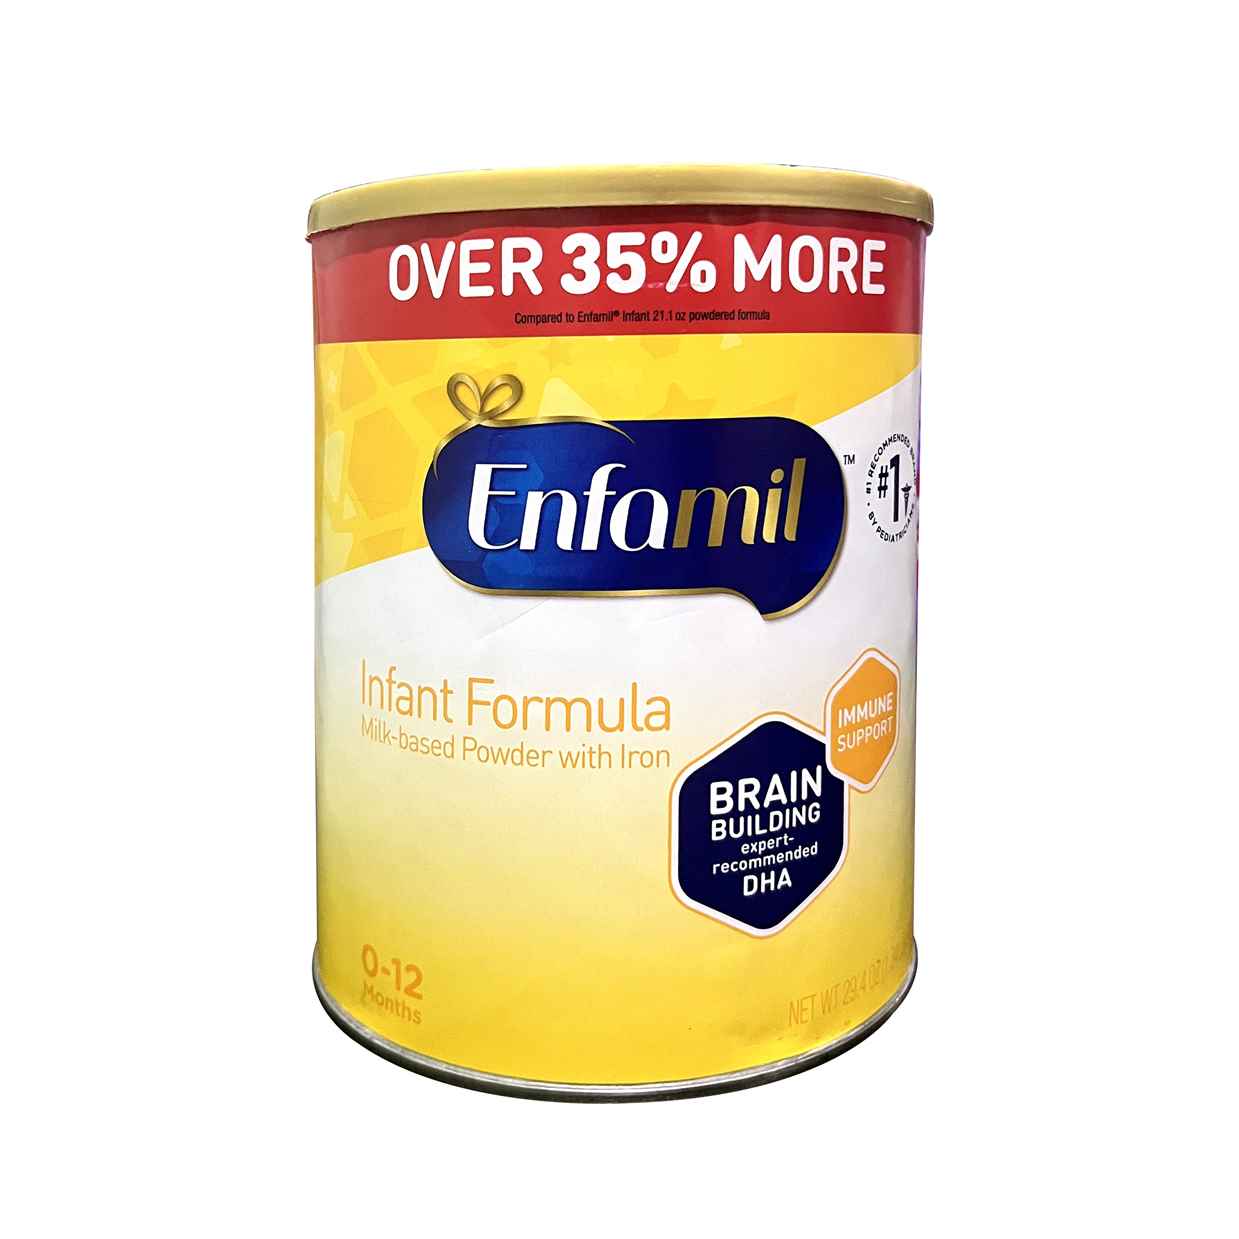 Enfamil Infant Formula Milk-Based Powder with Iron for Immune Support 0-12 Months - 834g